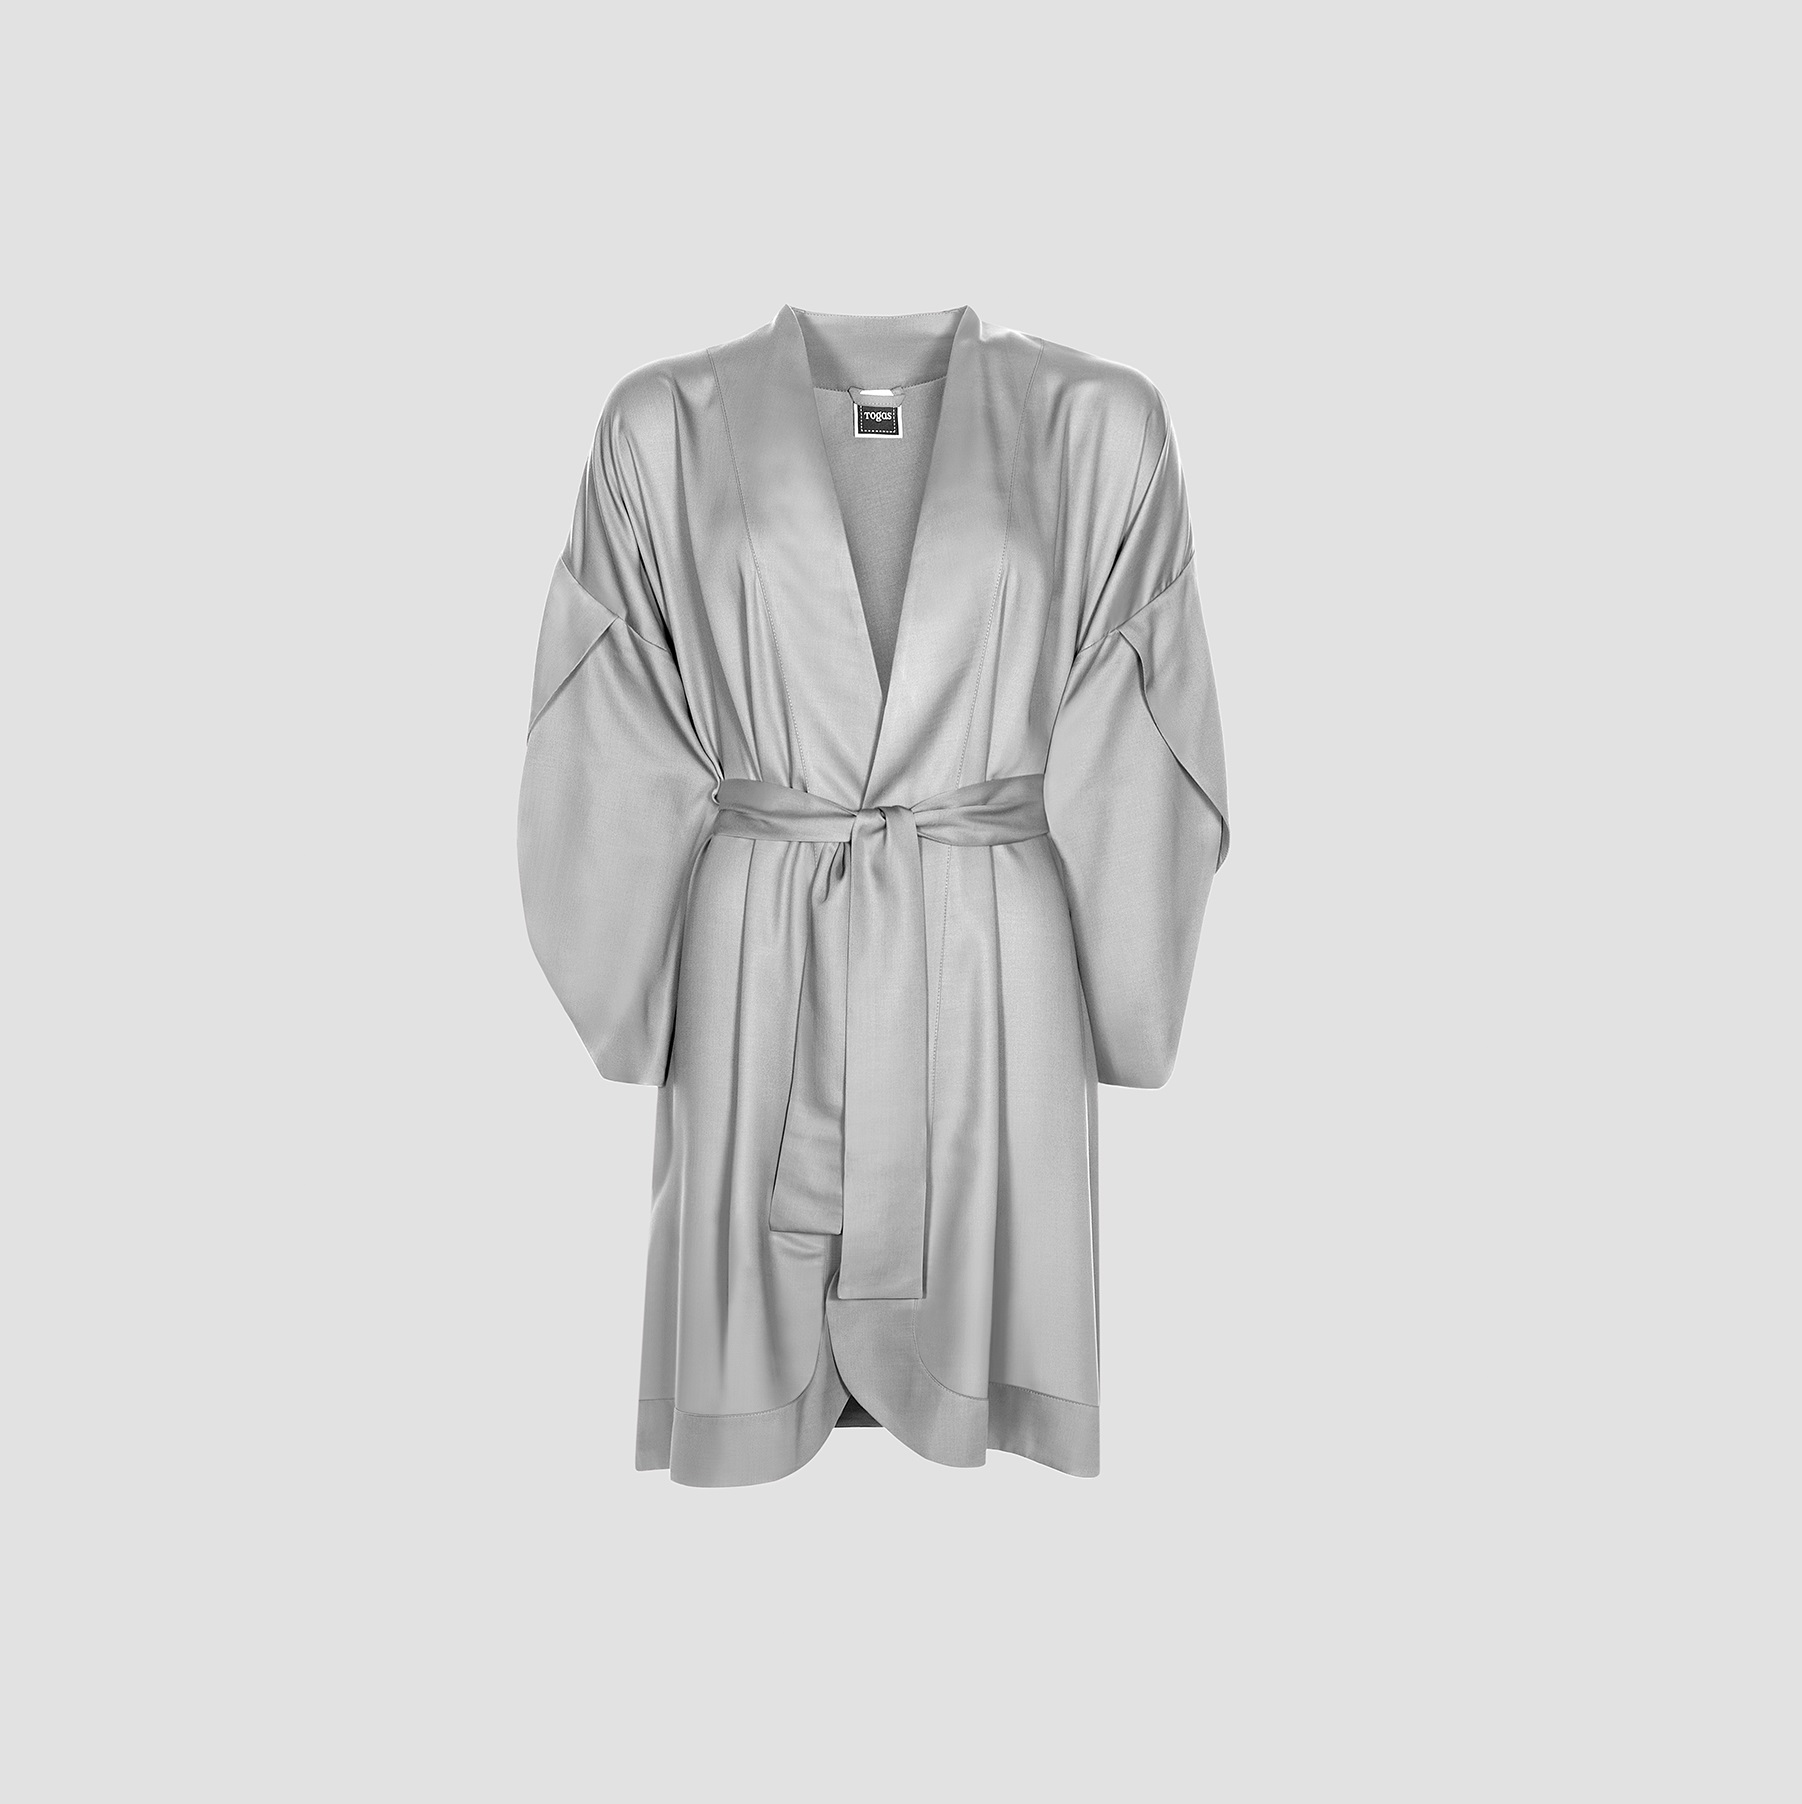 Халат-кимоно короткий Togas Наоми серый XS(42) халат кимоно короткий togas наоми серый m 46